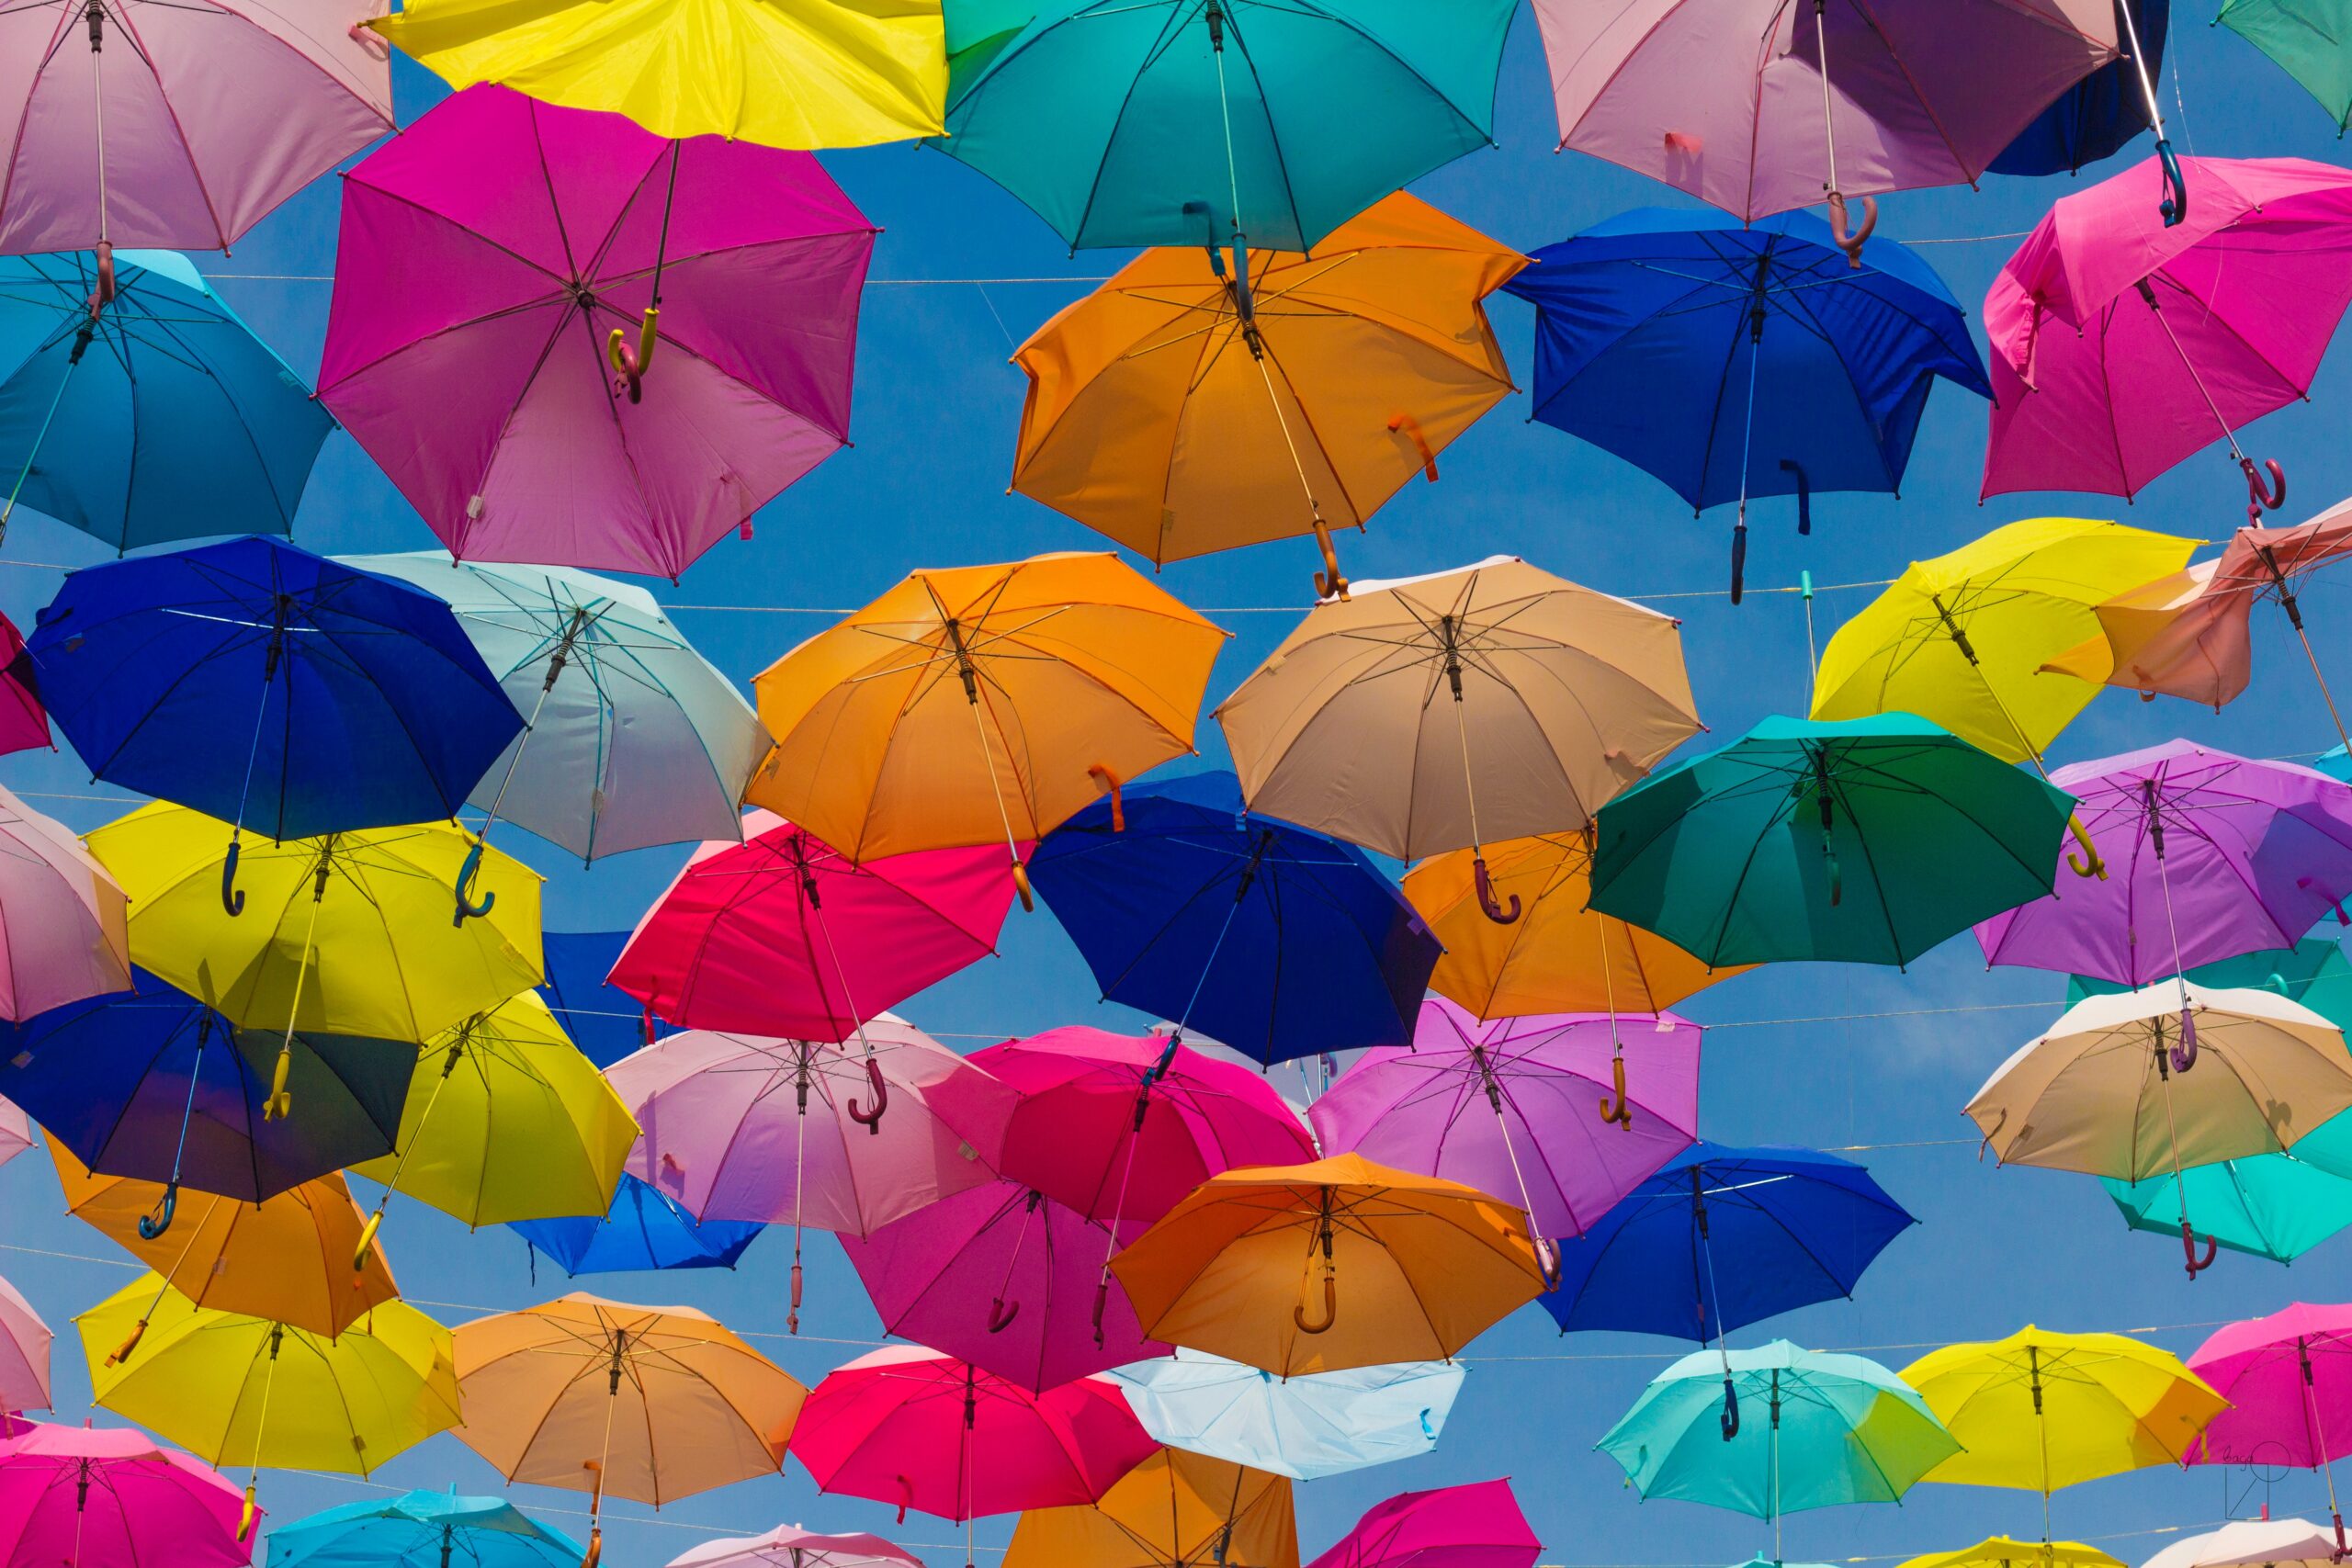 Umbrella building insurance cover